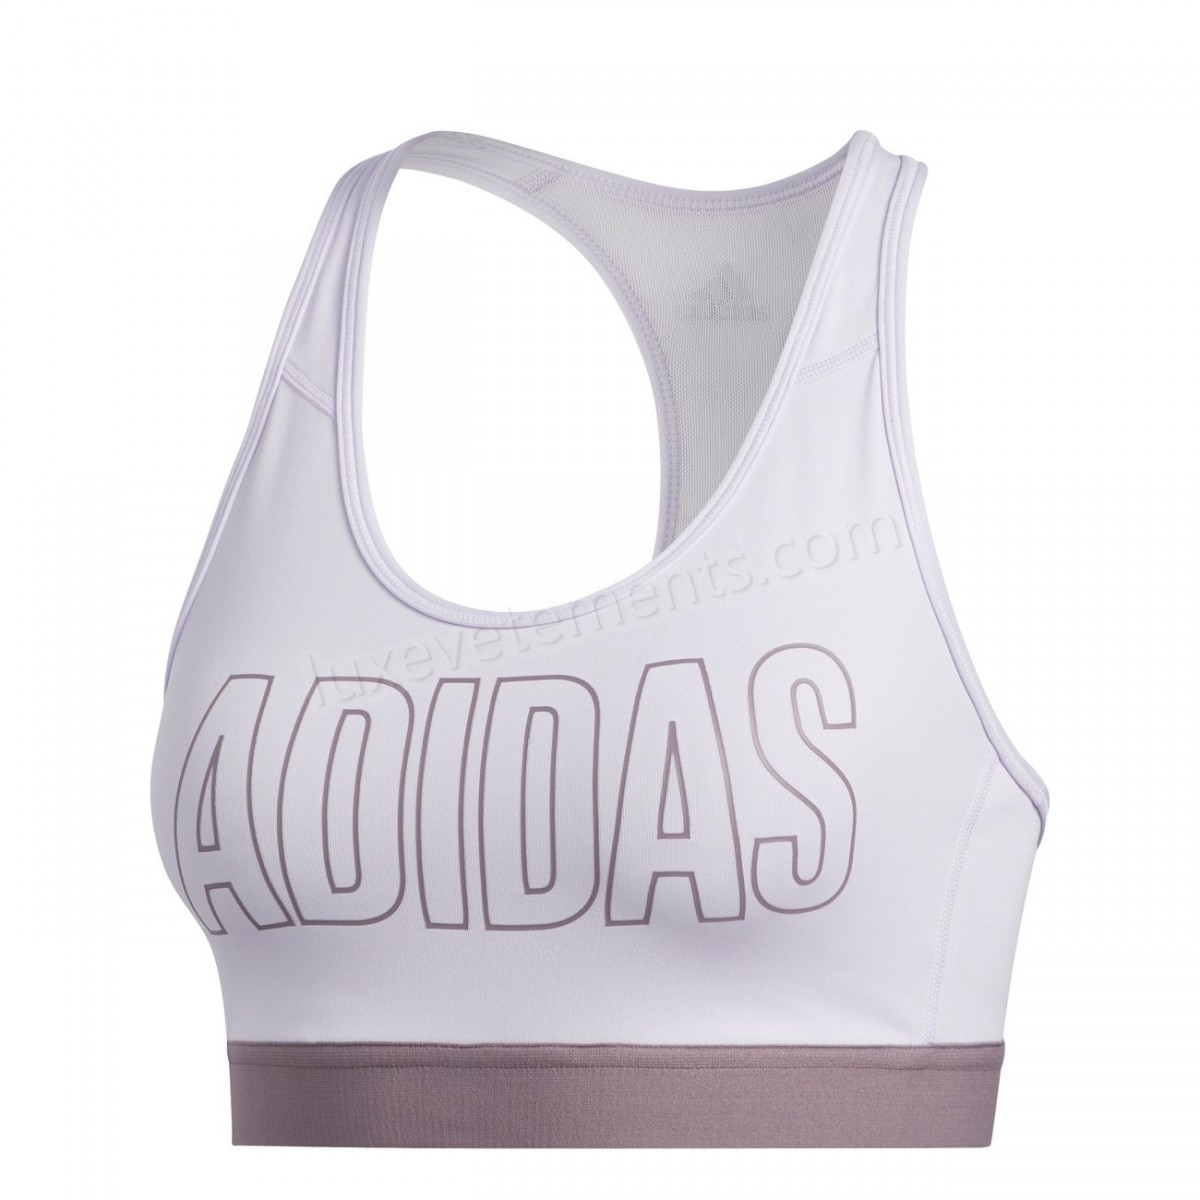 Adidas-Fitness femme ADIDAS Brassière adidas Don't Rest Alphaskin Vente en ligne - -9